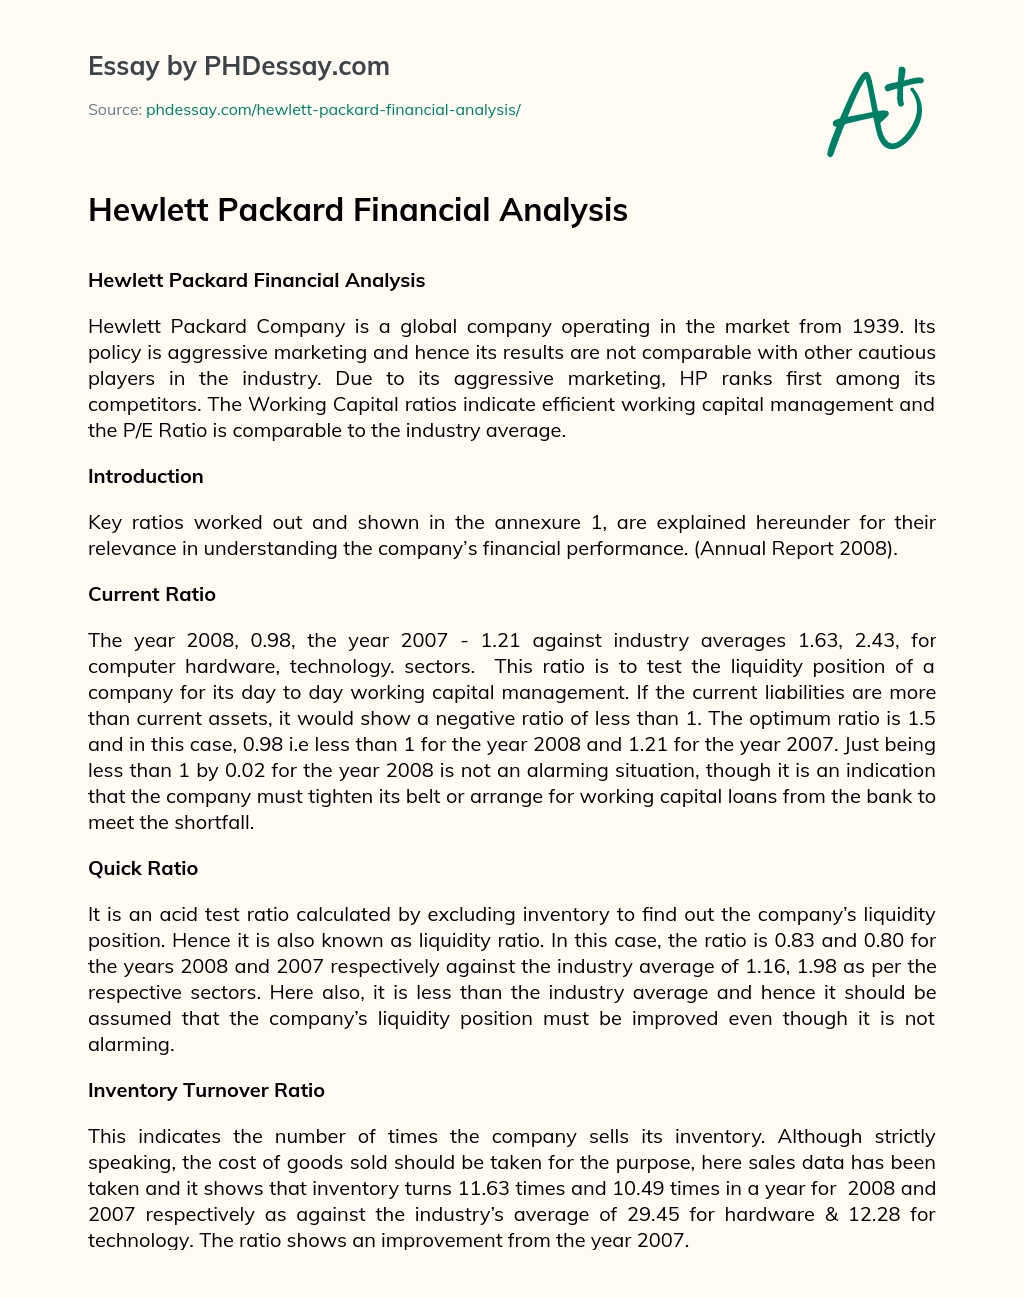 Hewlett Packard Financial Analysis essay